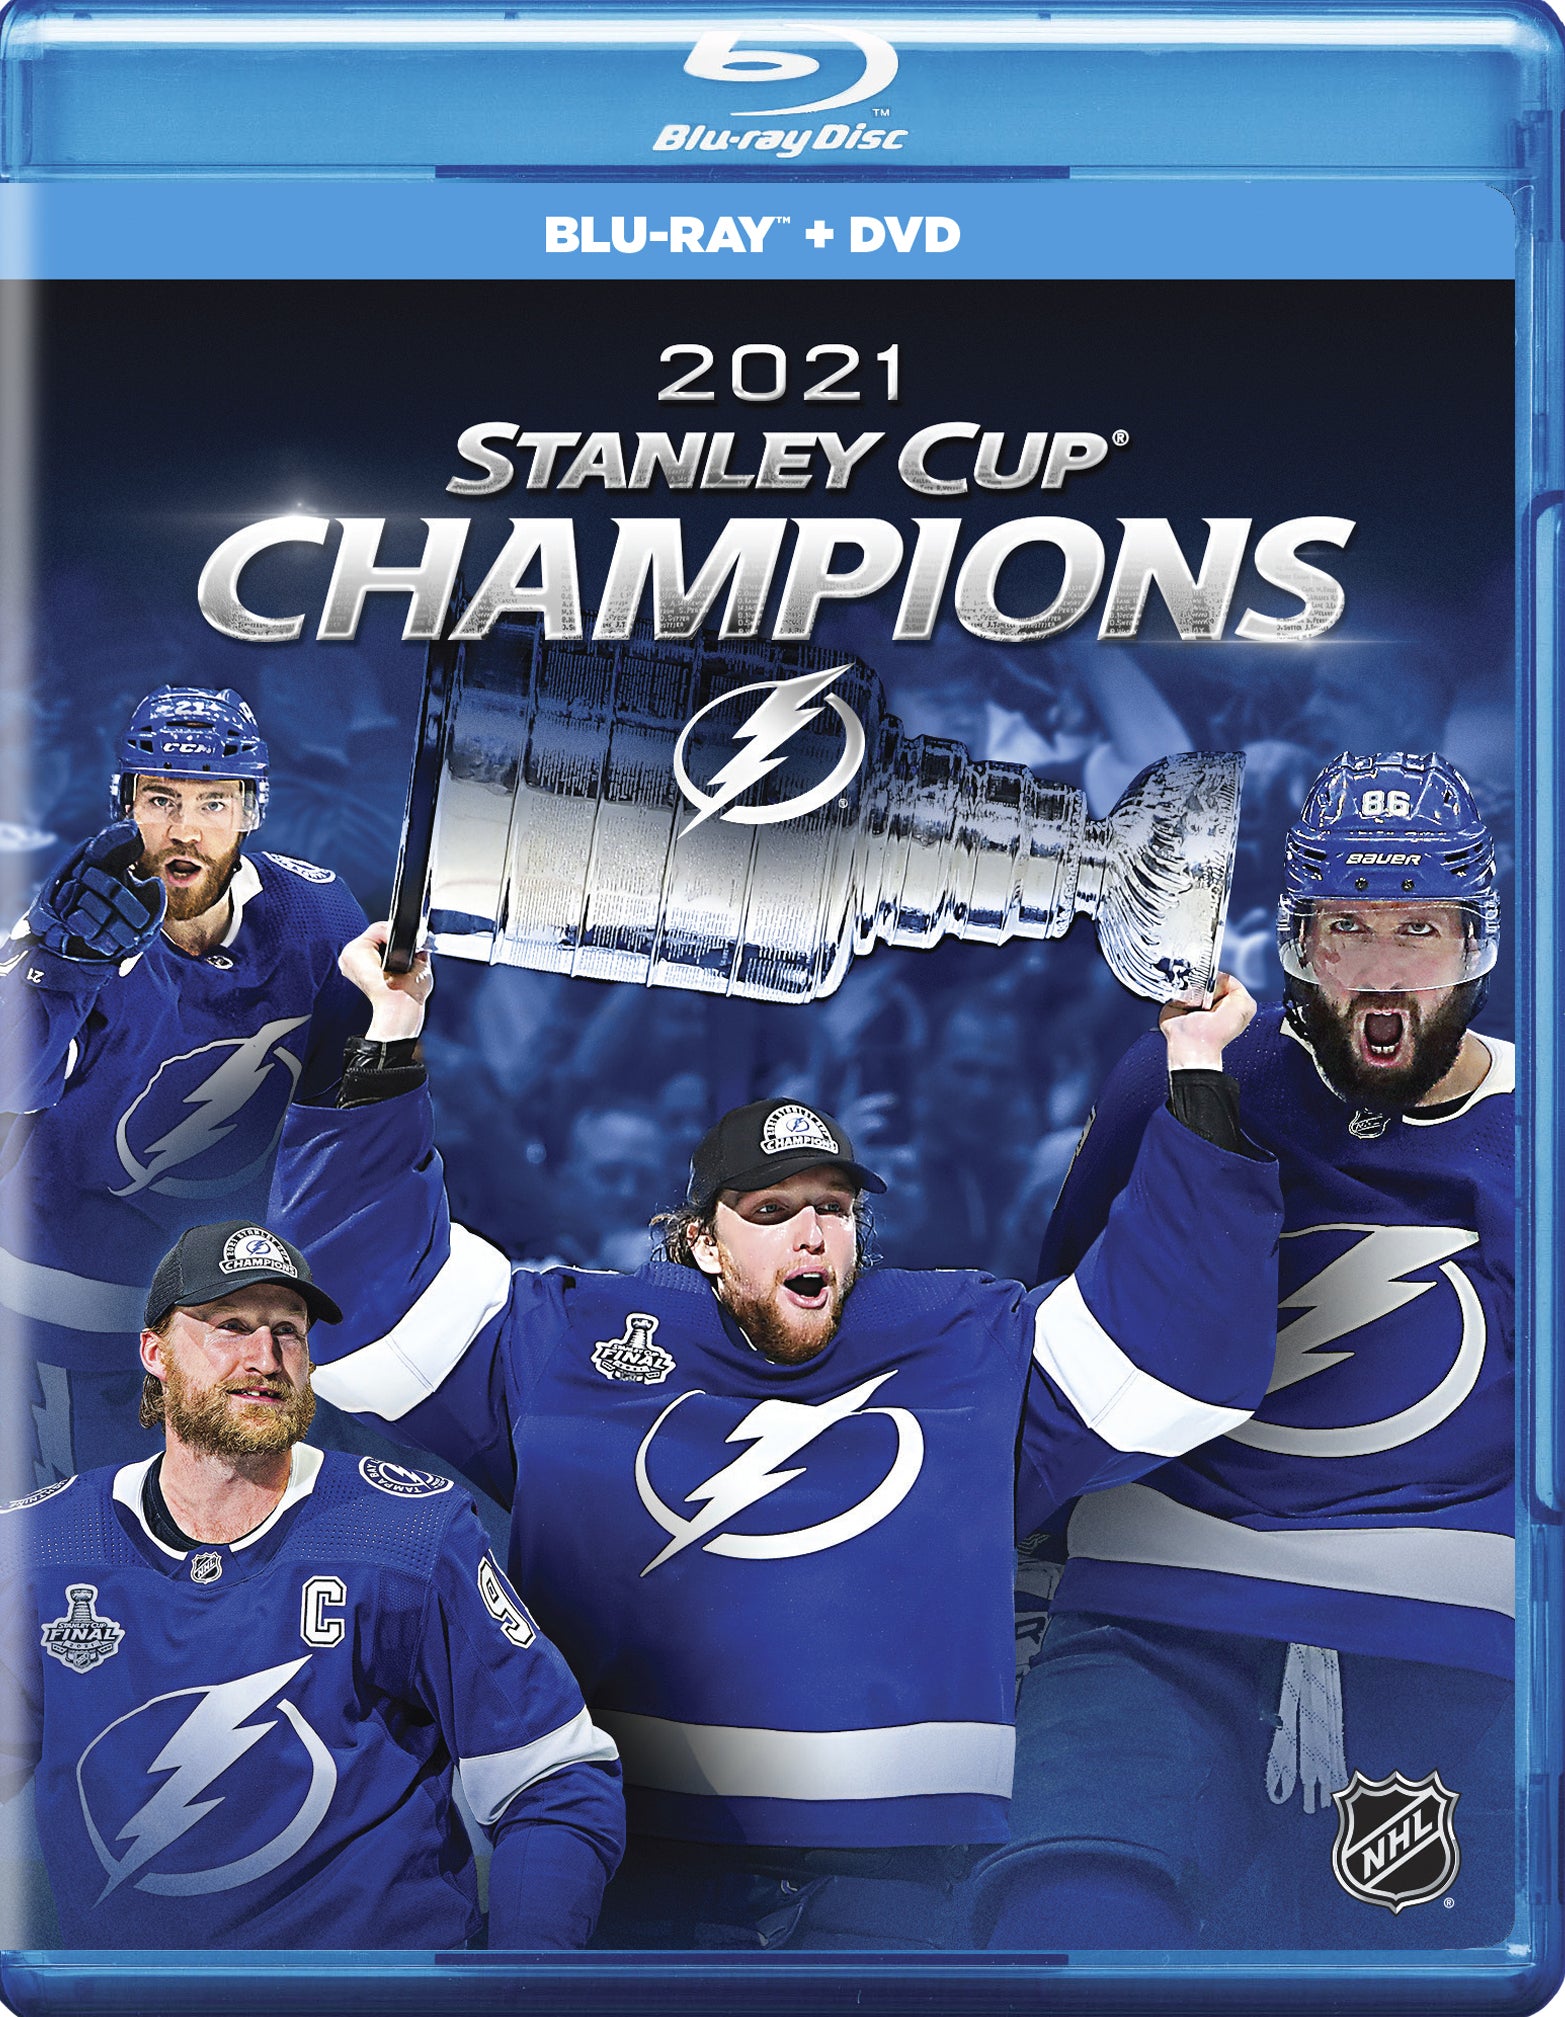 NHL: Stanley Cup 2021 Champions - Tampa Bay Lightning [Blu-ray/DVD] cover art